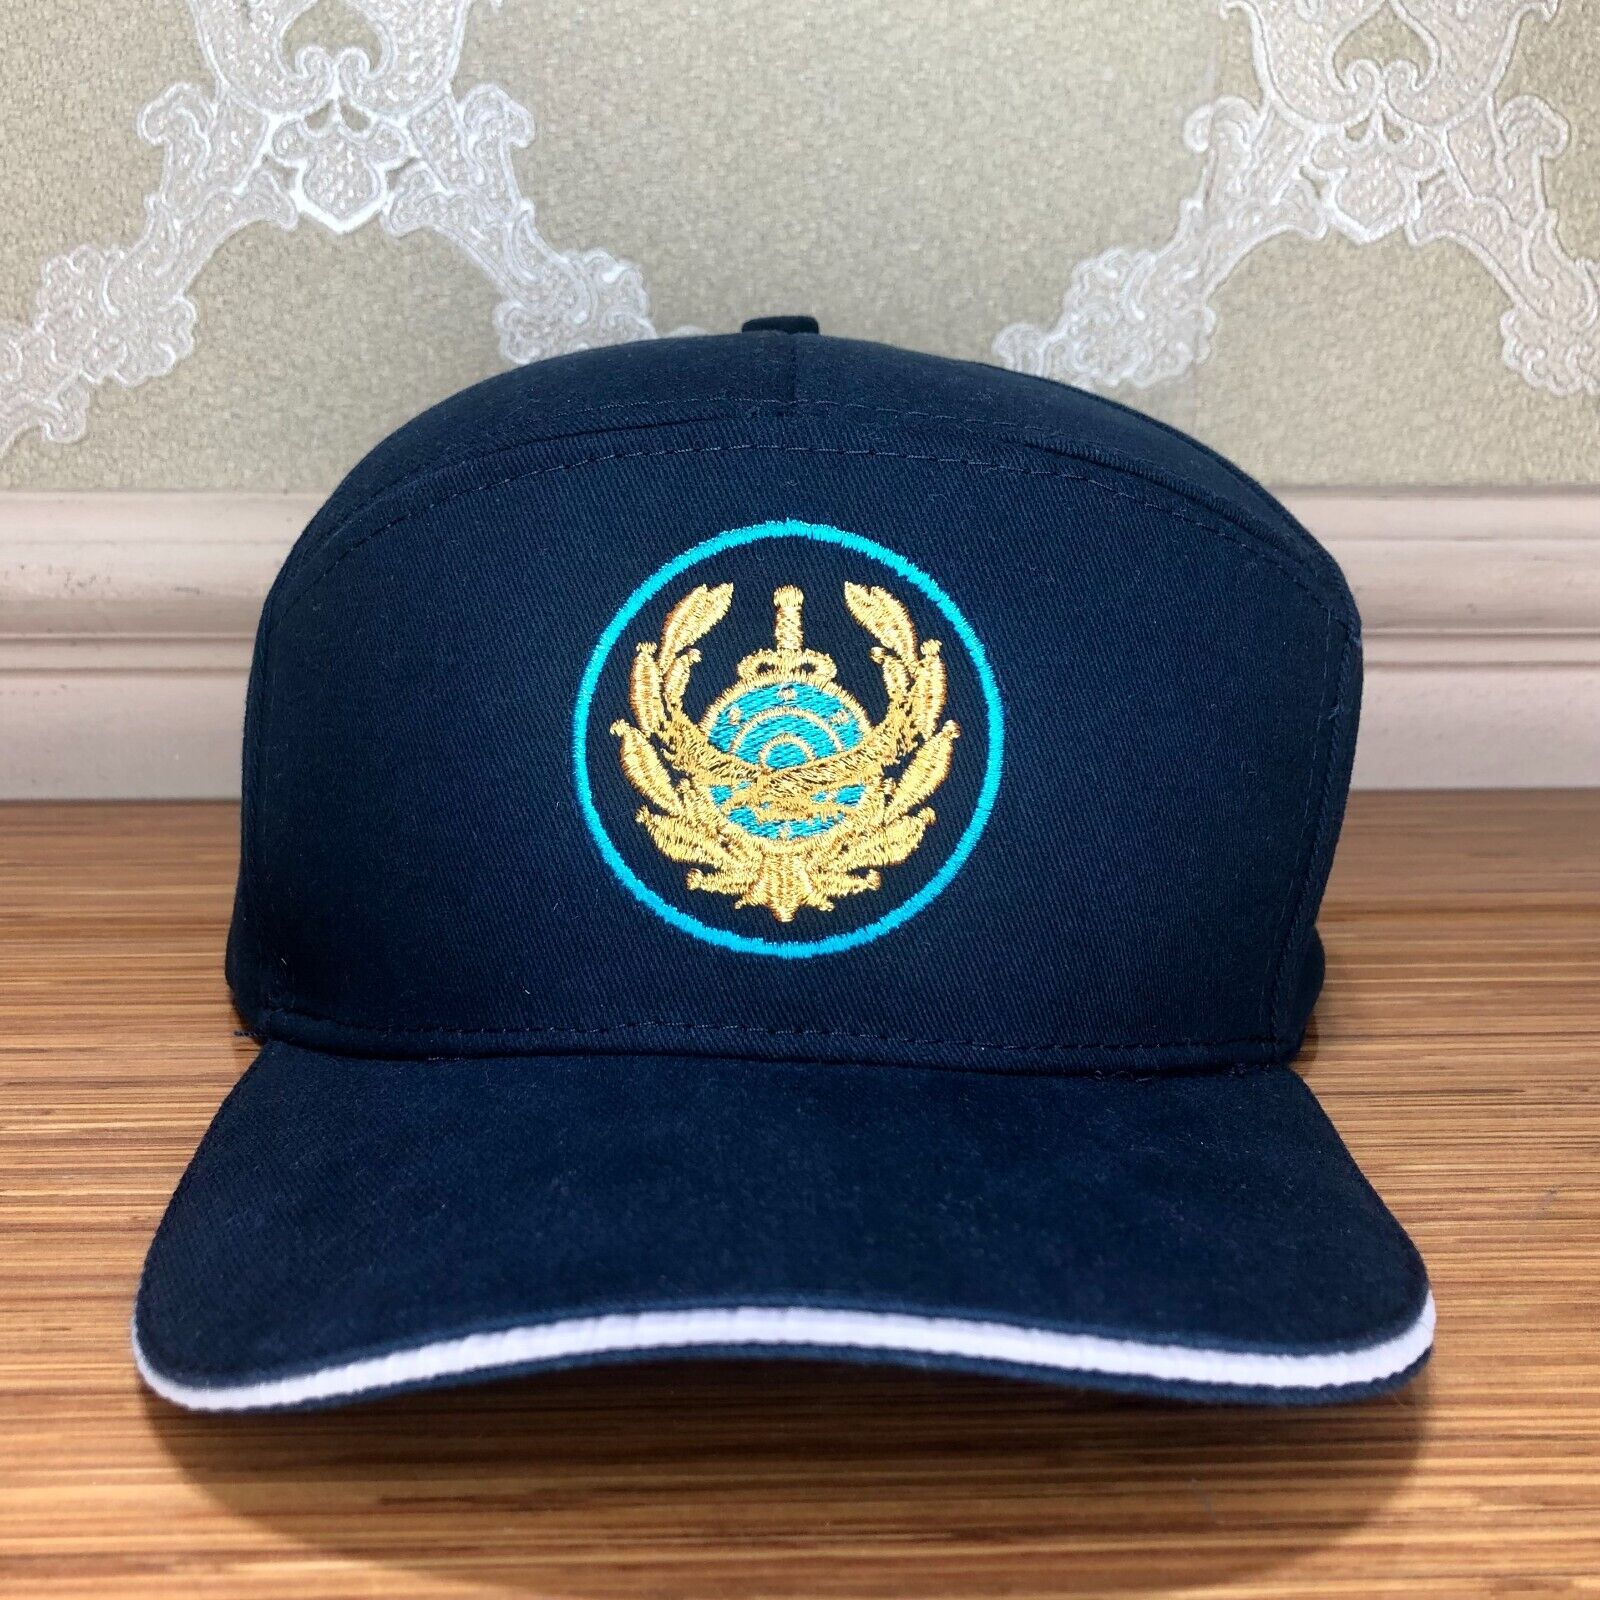 Kazakh Police Officer's Service Hat Cap Kazakhstan Brand New Universal Size